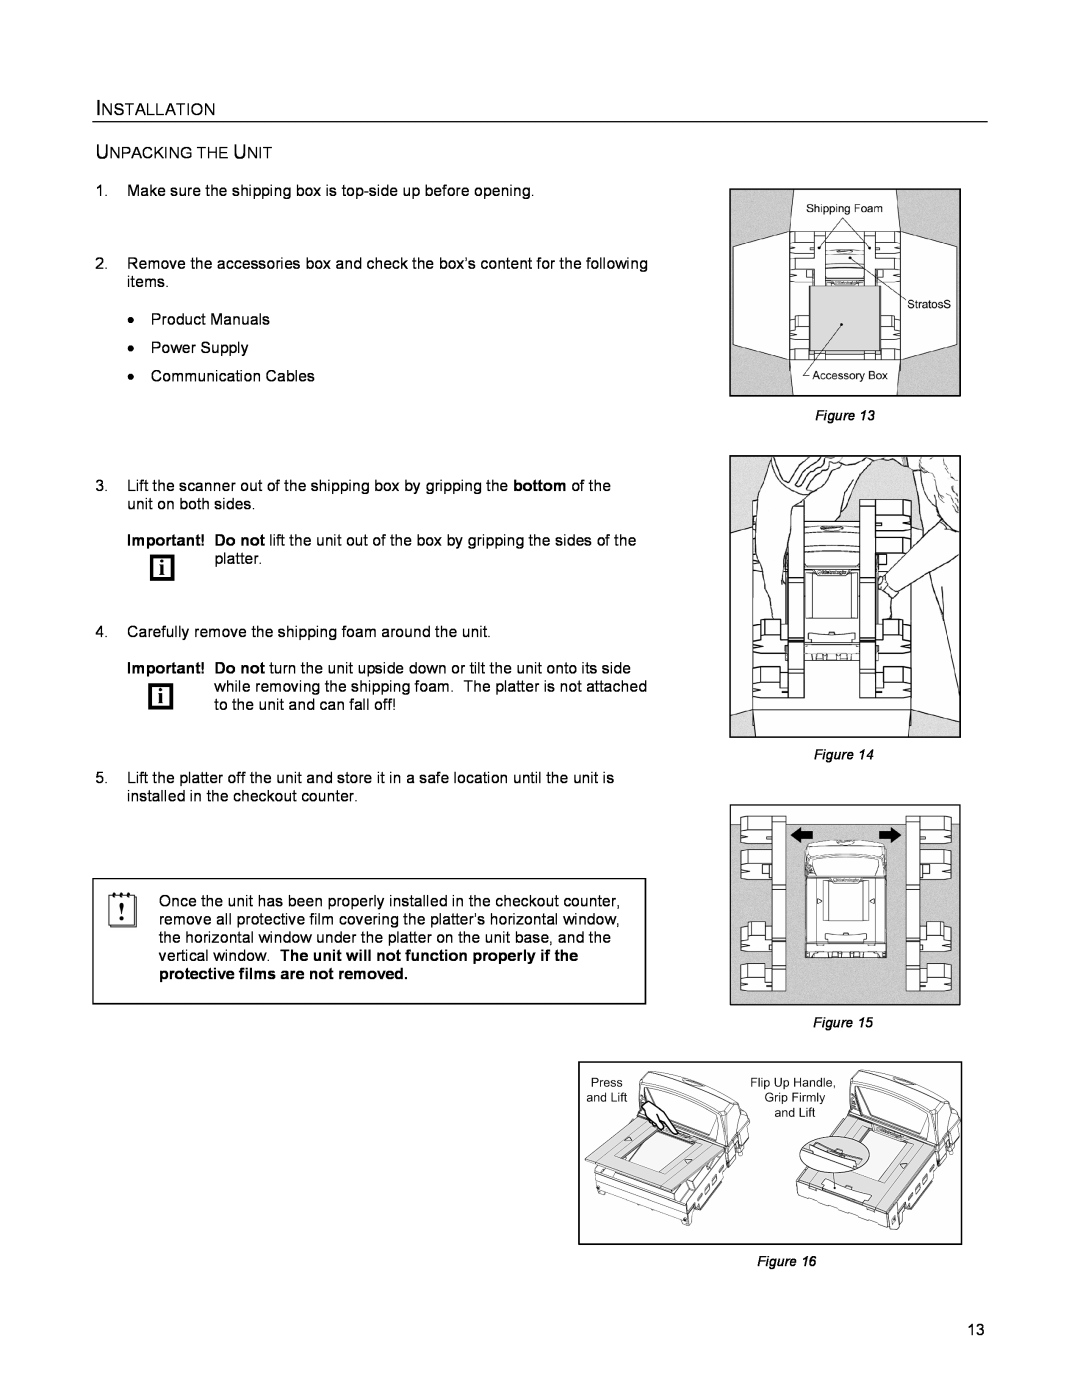 Metrologic Instruments MS2421, MS2422 manual Installation, Unpacking The Unit 